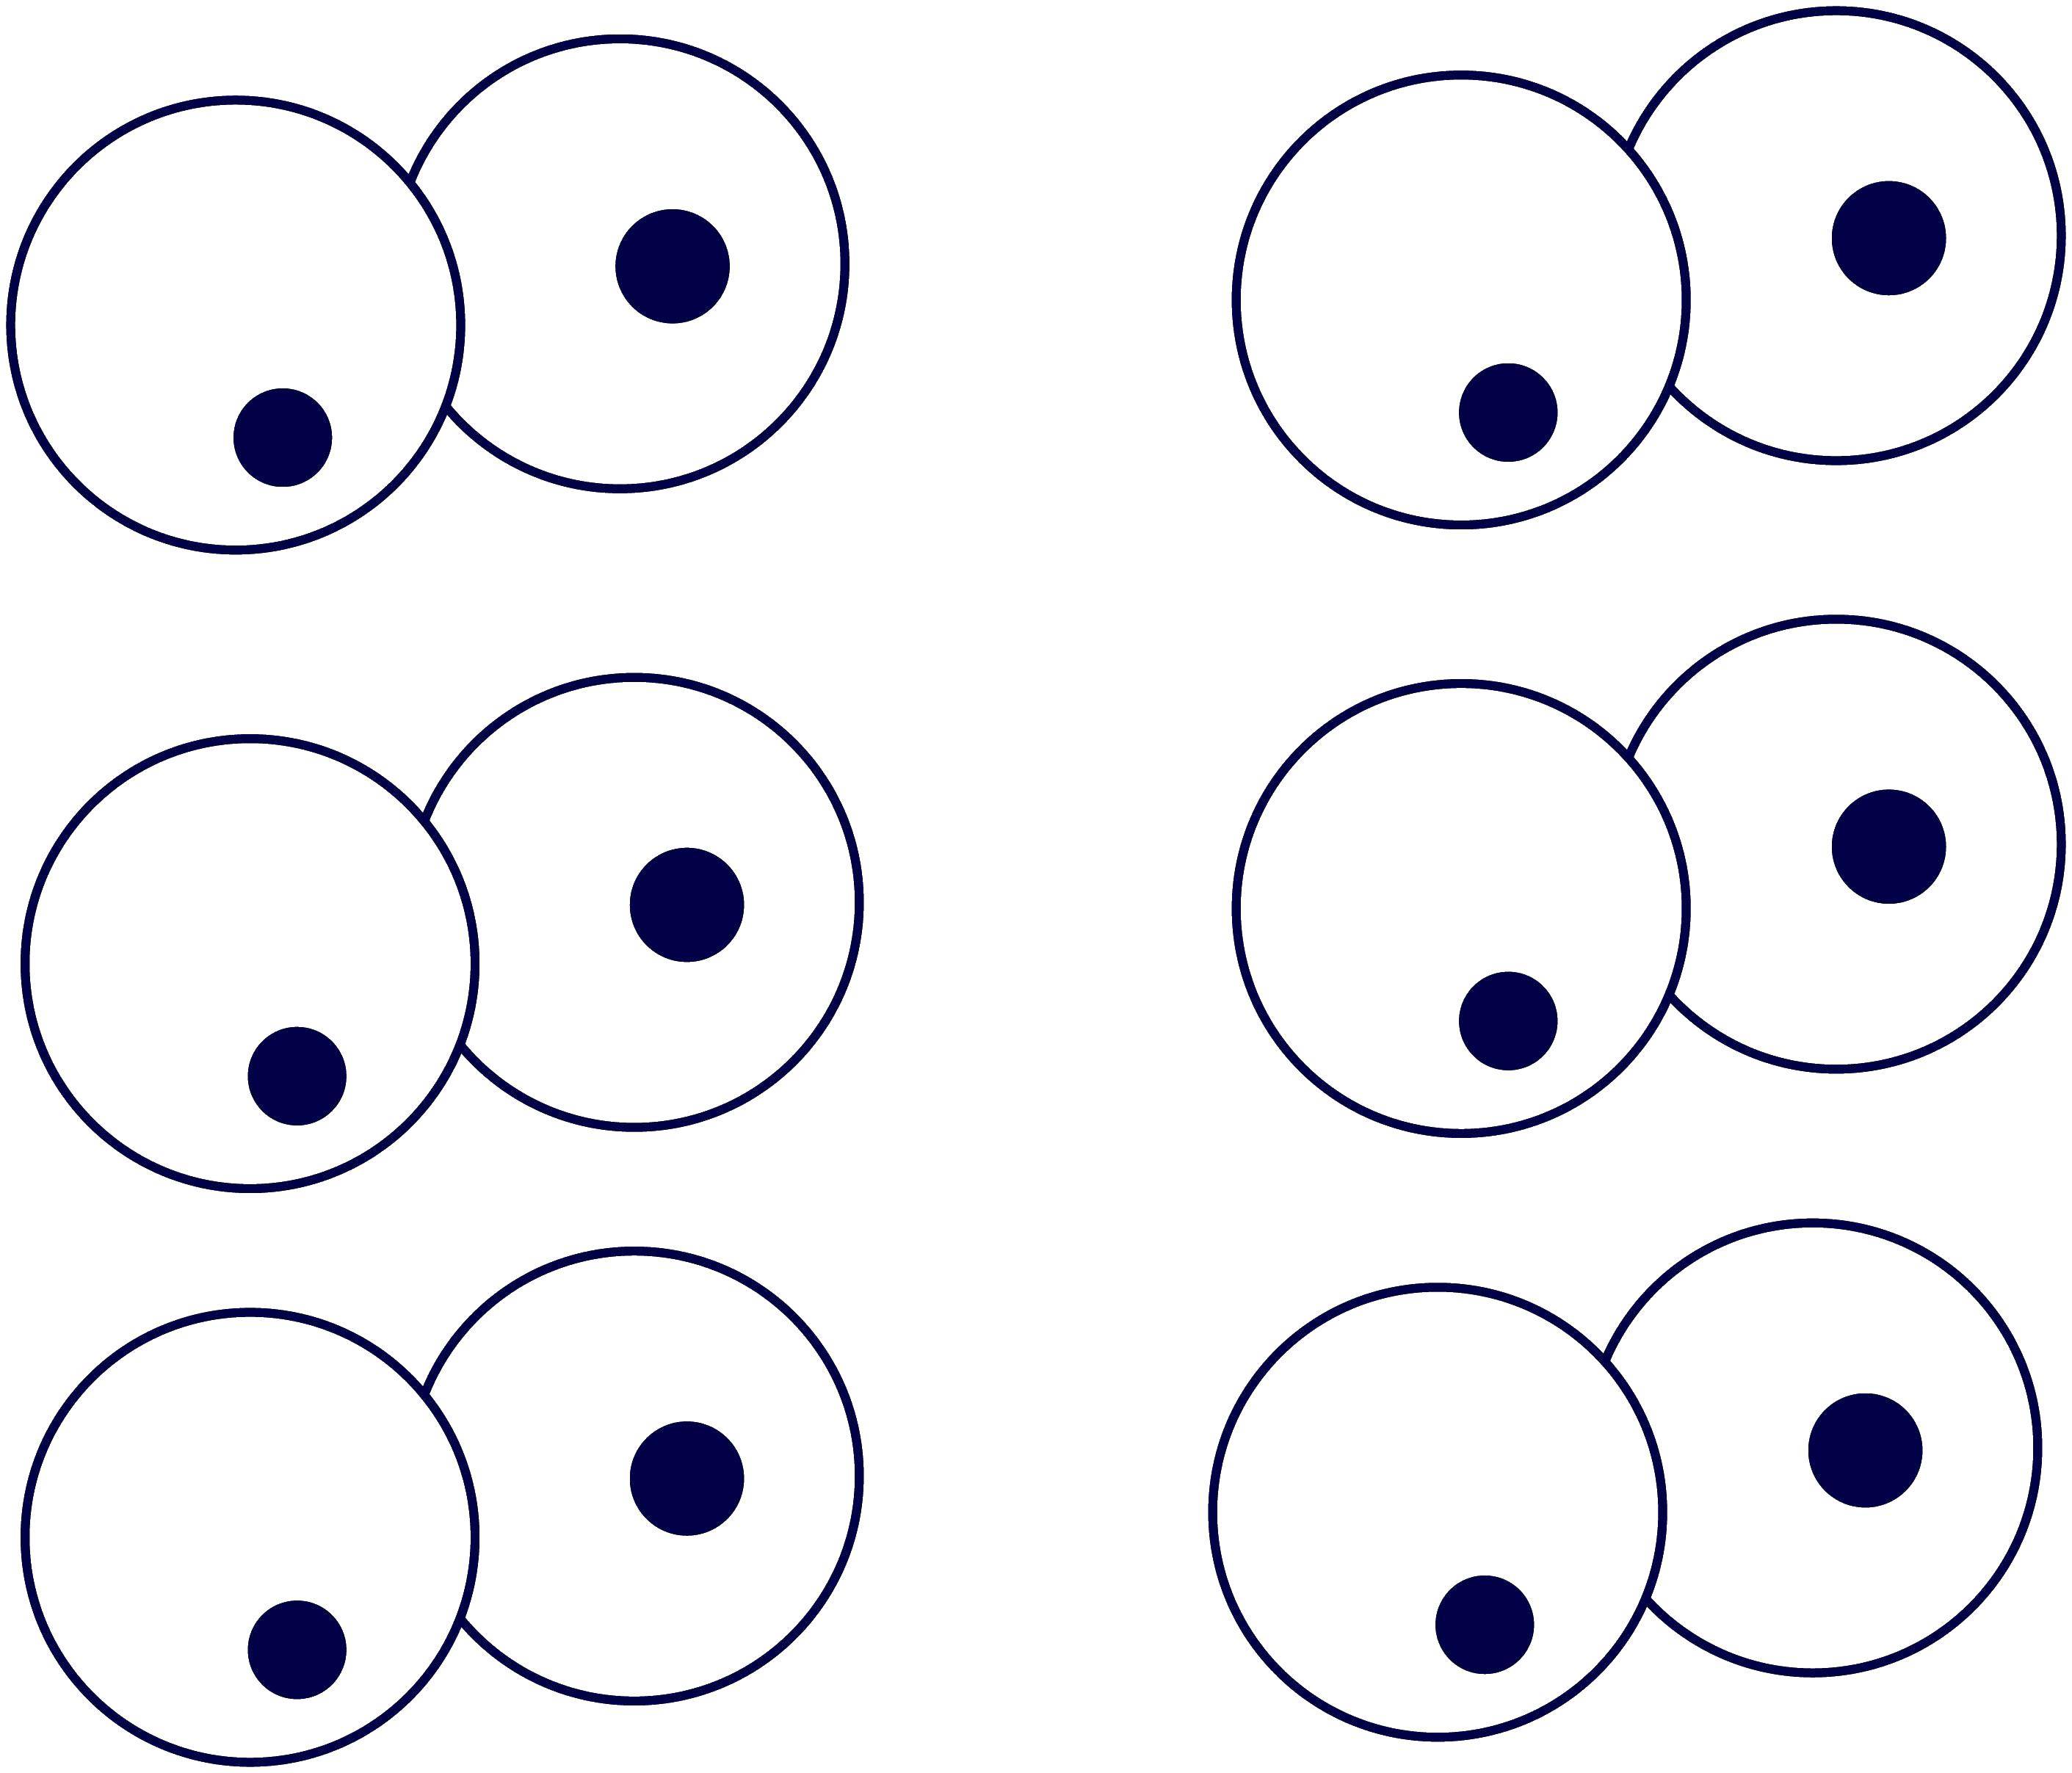 Coloring Eyeballs. Category eyes. Tags:  eyes, eyeballs.